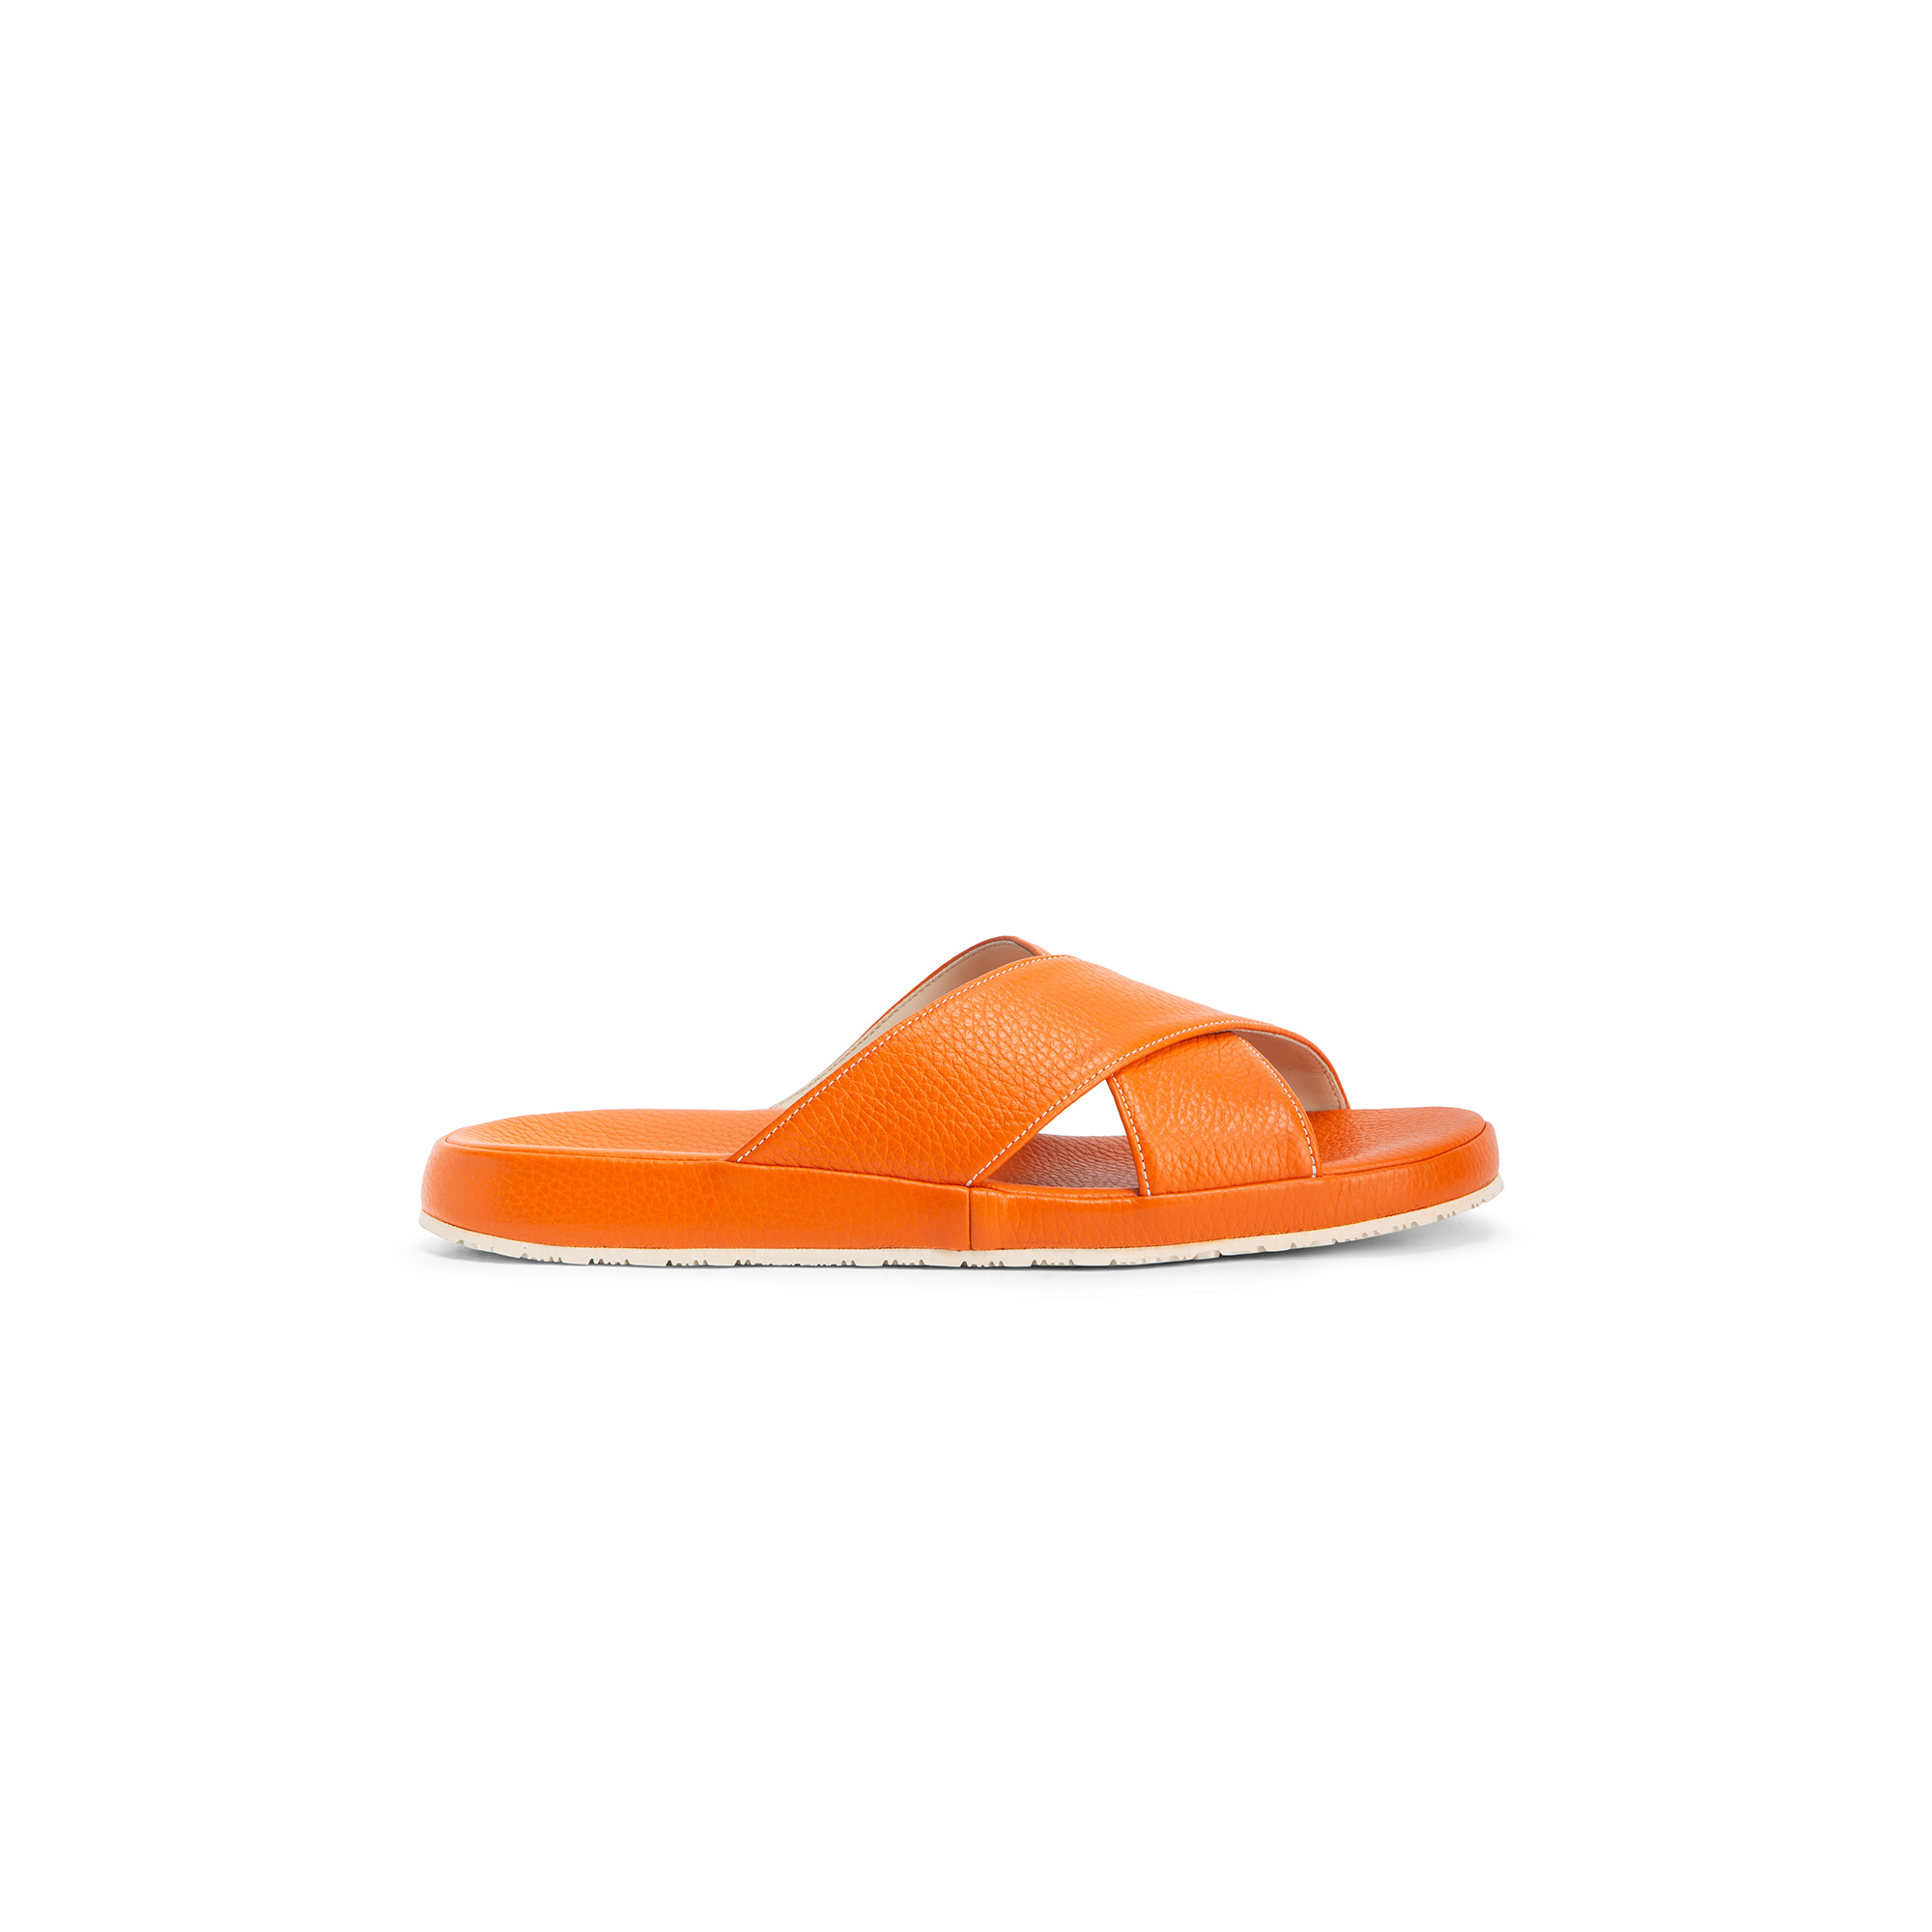 Sandalo esterno cervo arancio - Farfalla italian slippers